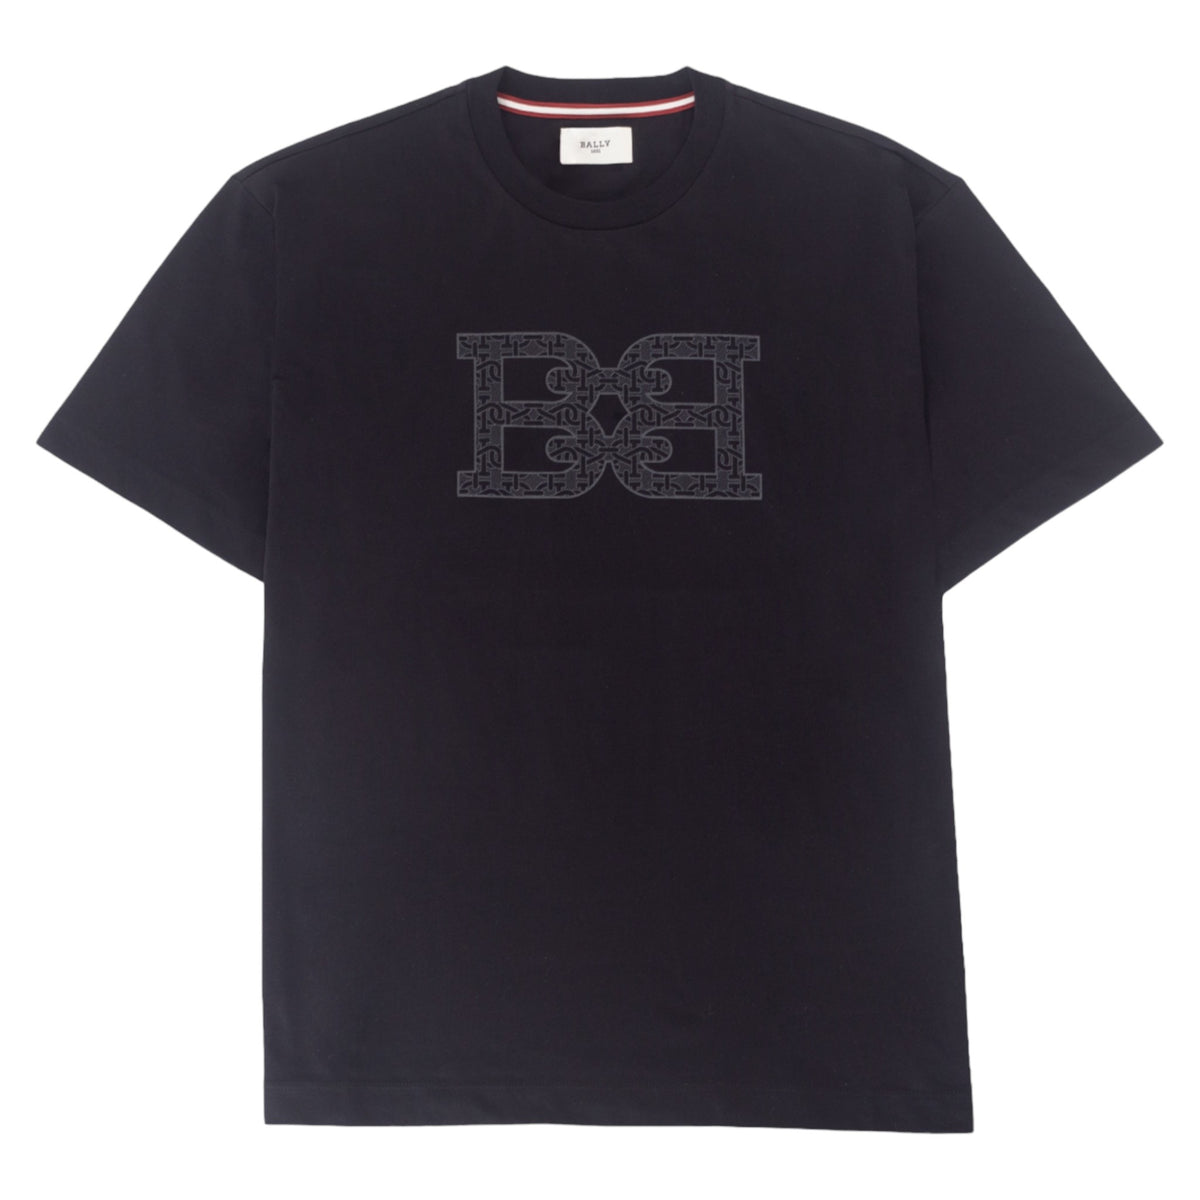 Bally Men's B-Chain Monogram Logo T-Shirt